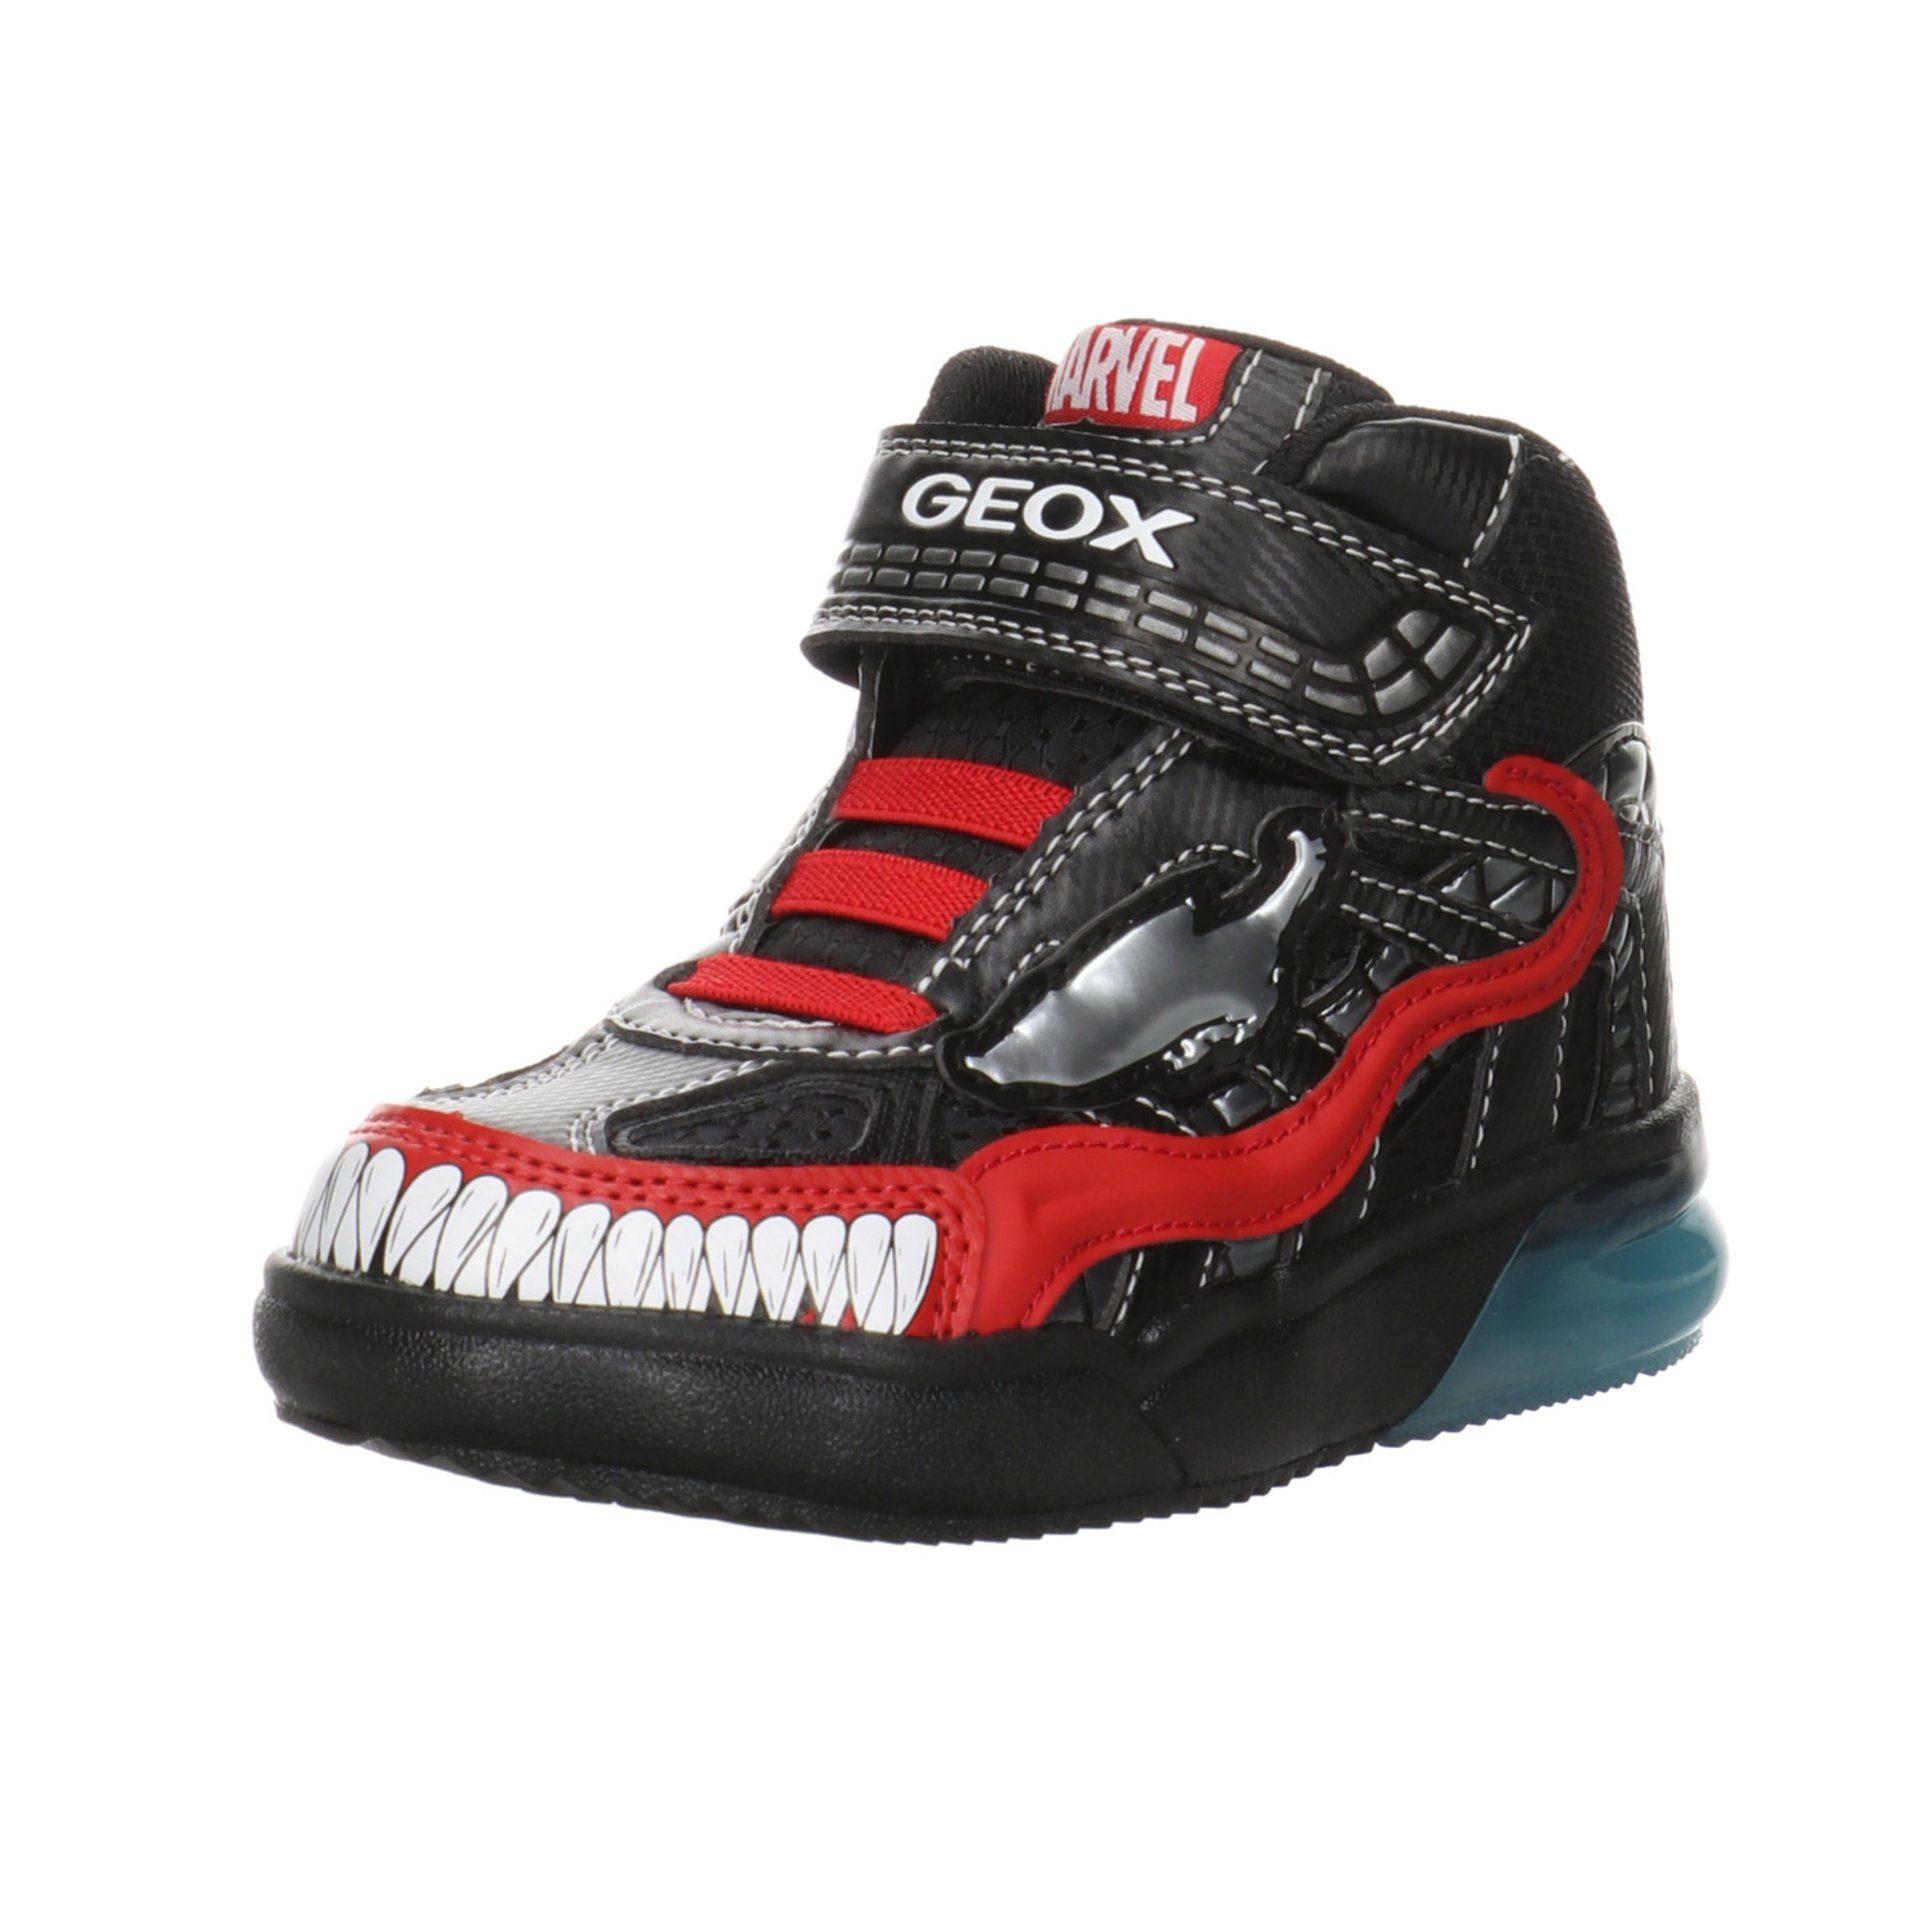 Geox Jungen Schnürhalbschuhe Grayjay Boots Kinderschuhe Schnürschuh Synthetikkombination black/red